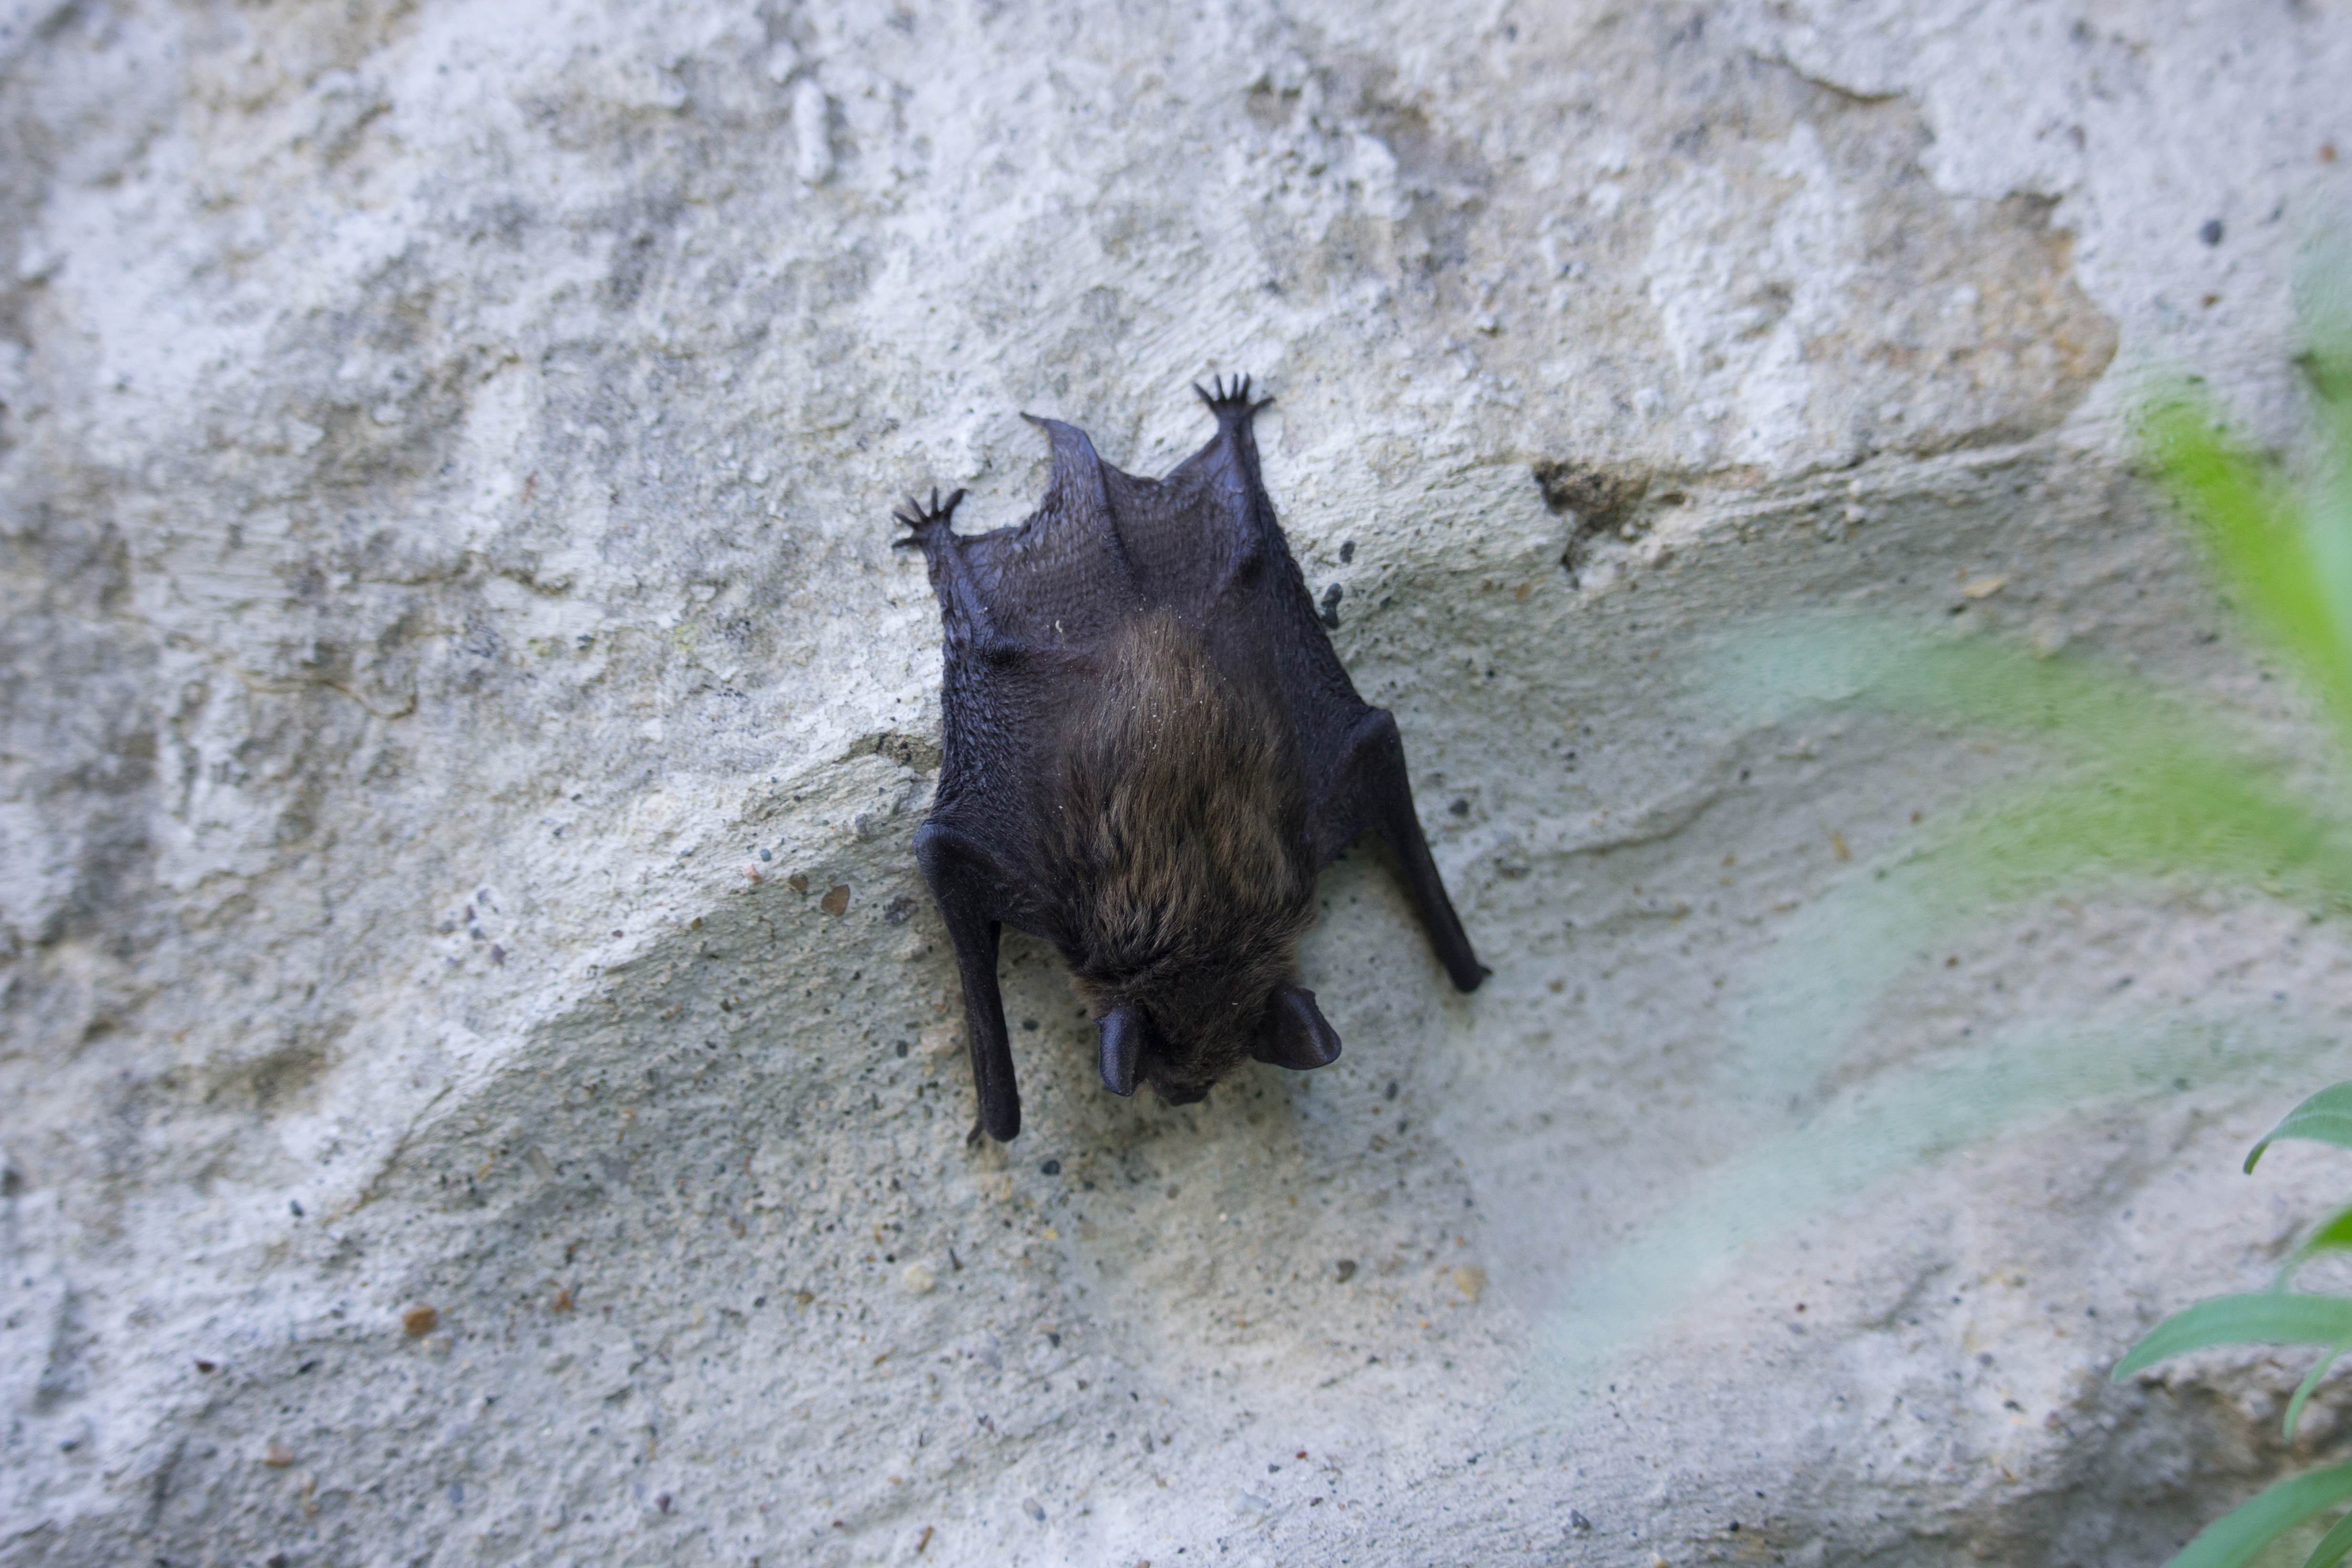 barbastelle bat